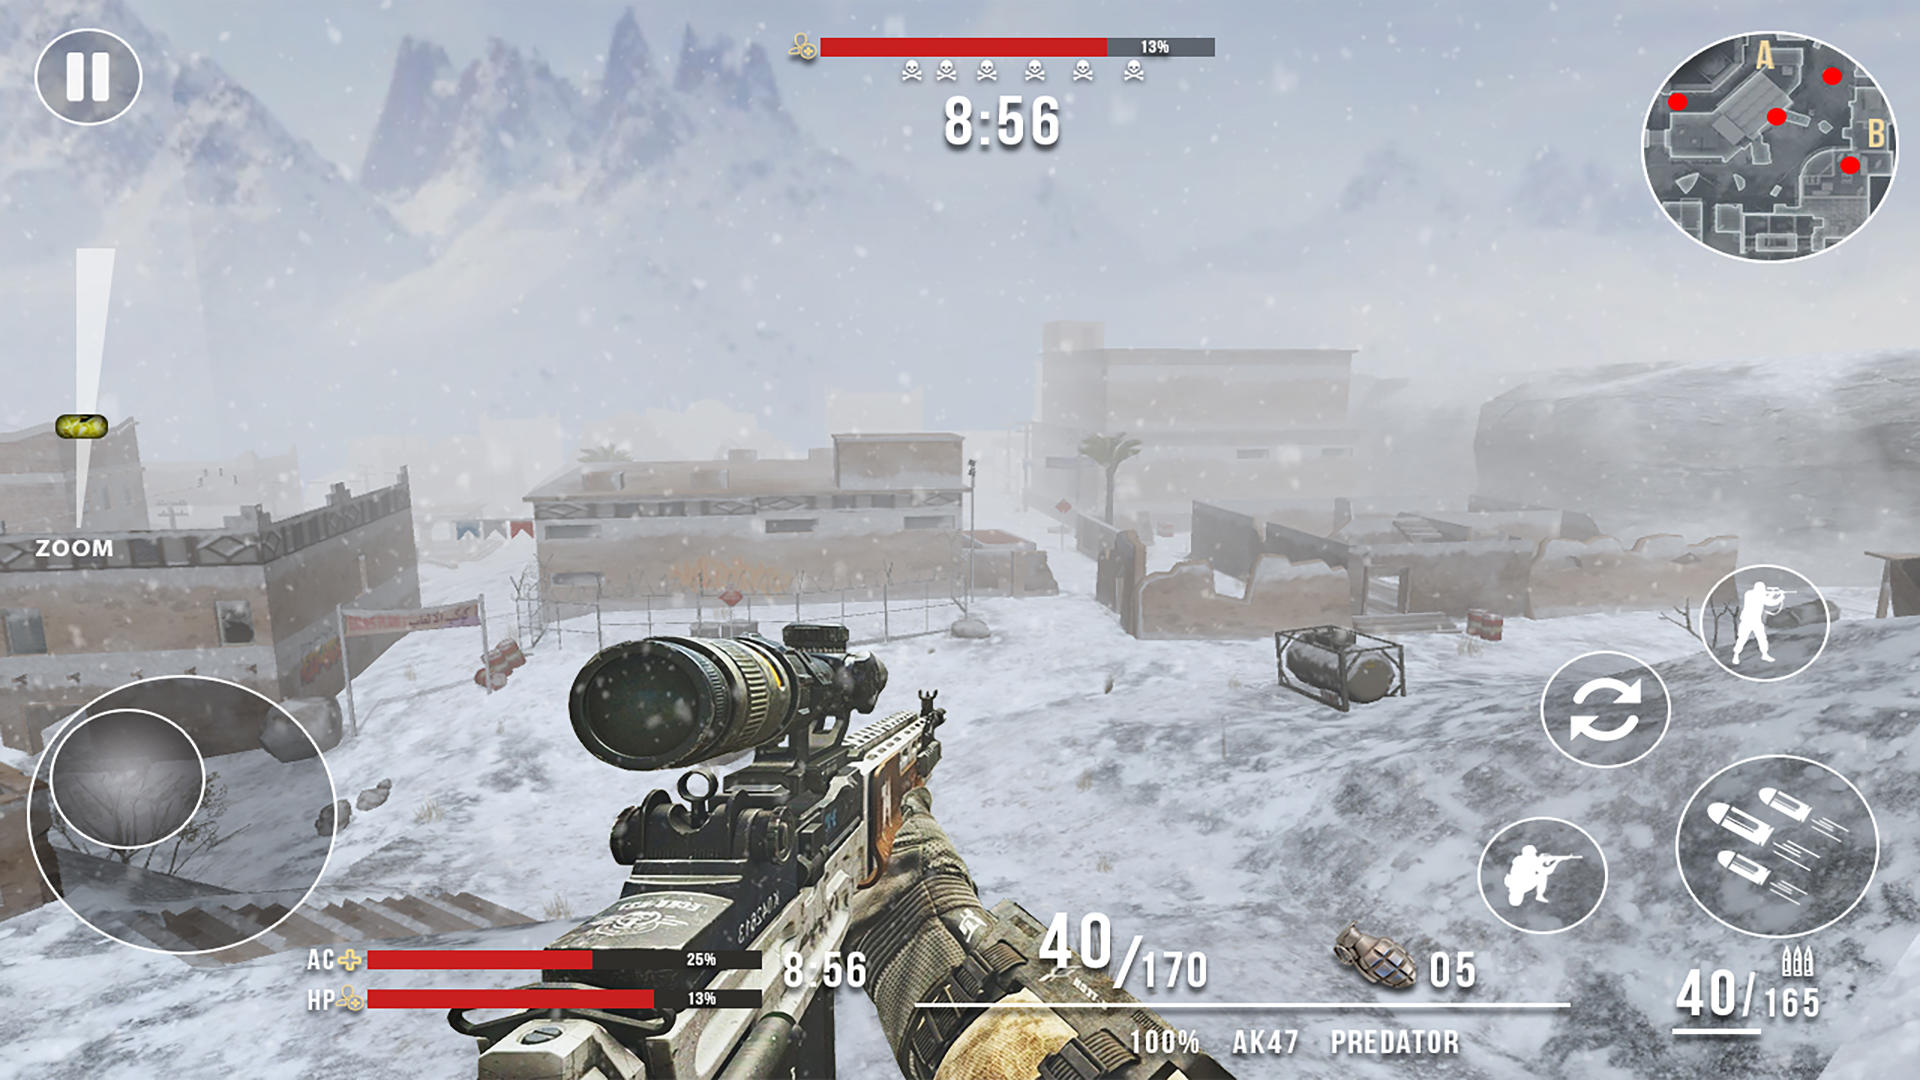 Screenshot 1 of Jogo de Guerra: Luta com Armas 3.4.2